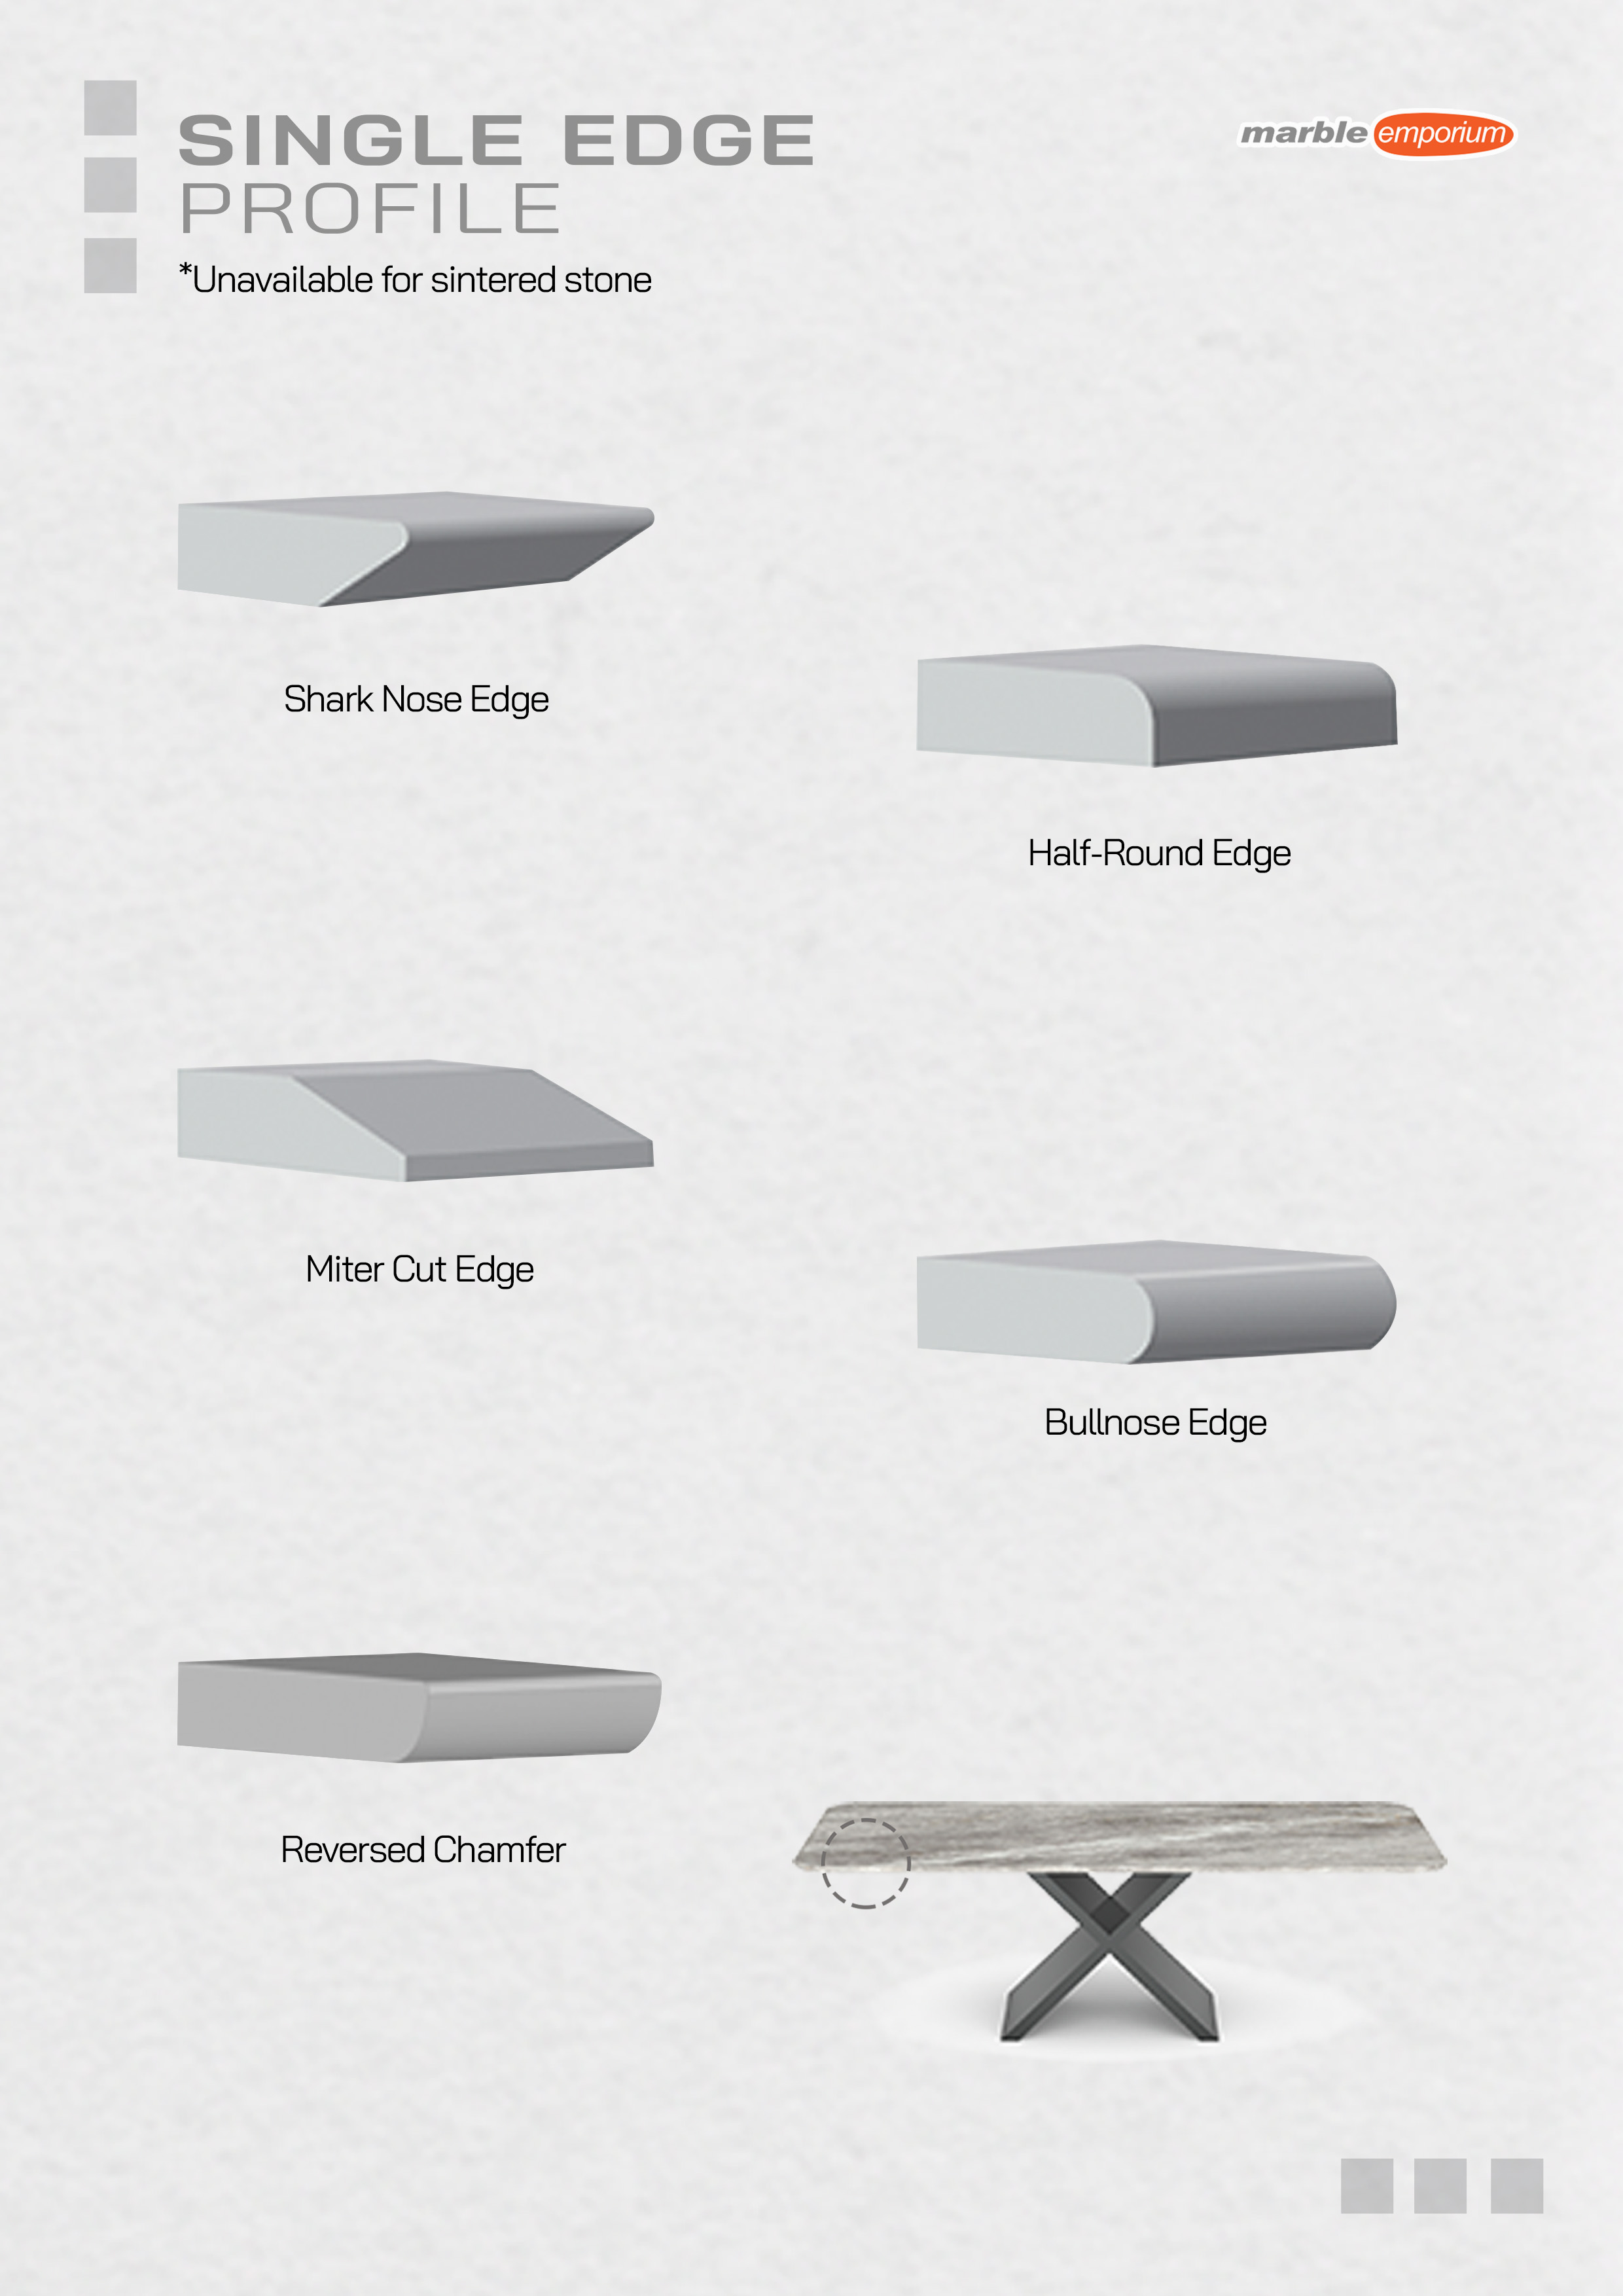 Marble Emporium | How we work page 09 - Single Edge Profile *Unavailable for sintered stone | Shark Nose Edge, Half-Round Edge, Miter Cut Edge, Bullnose Edge, Reversed Chamfer